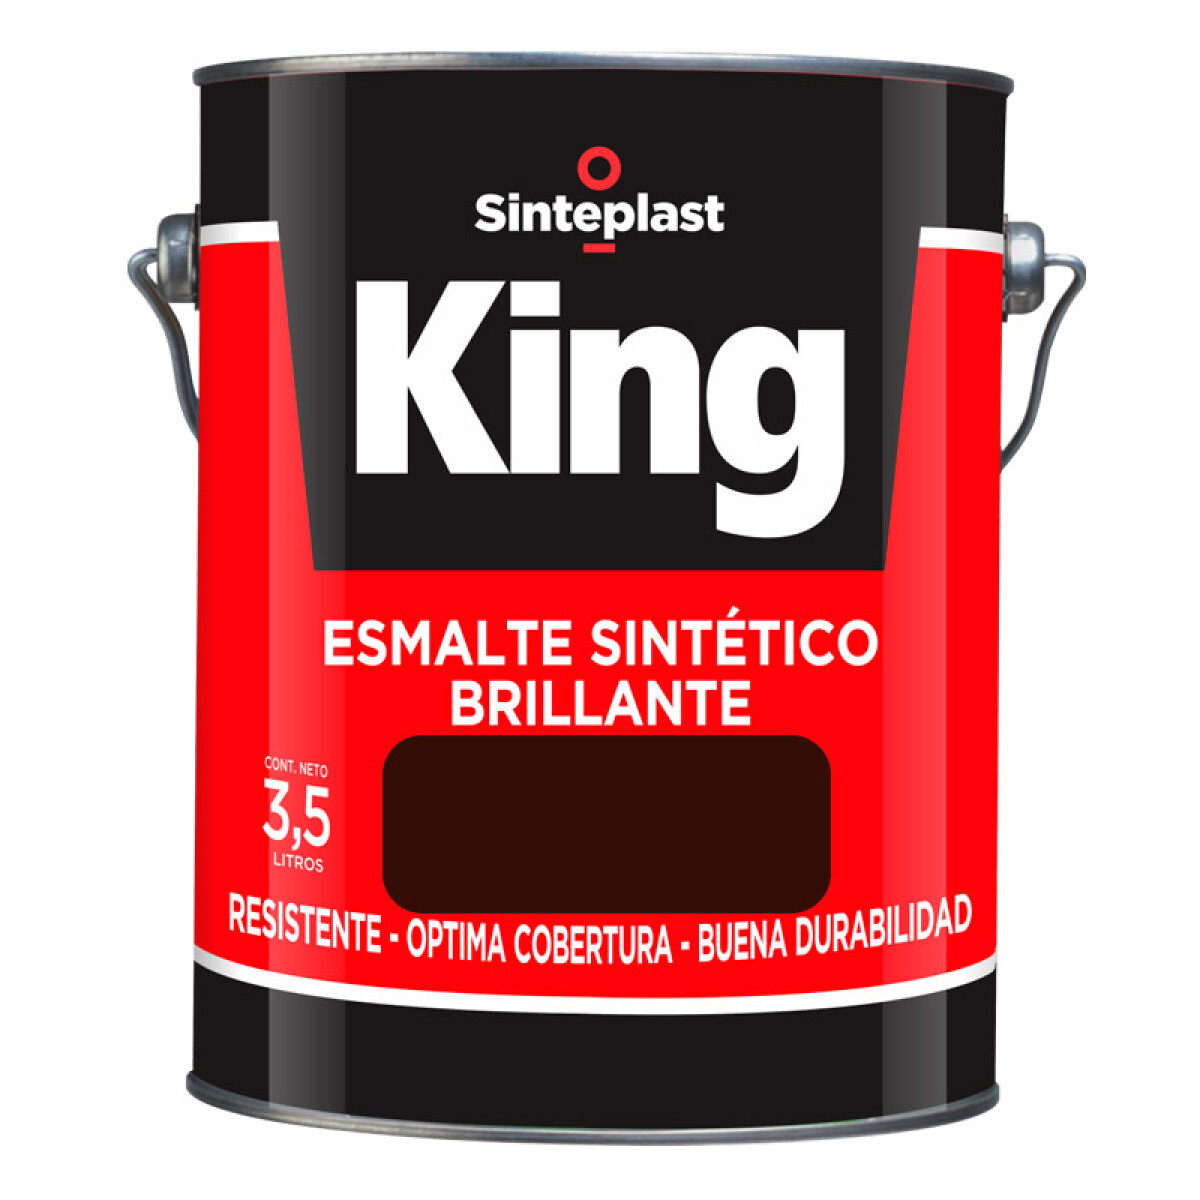 King Esmalte Brillante - Cedro 